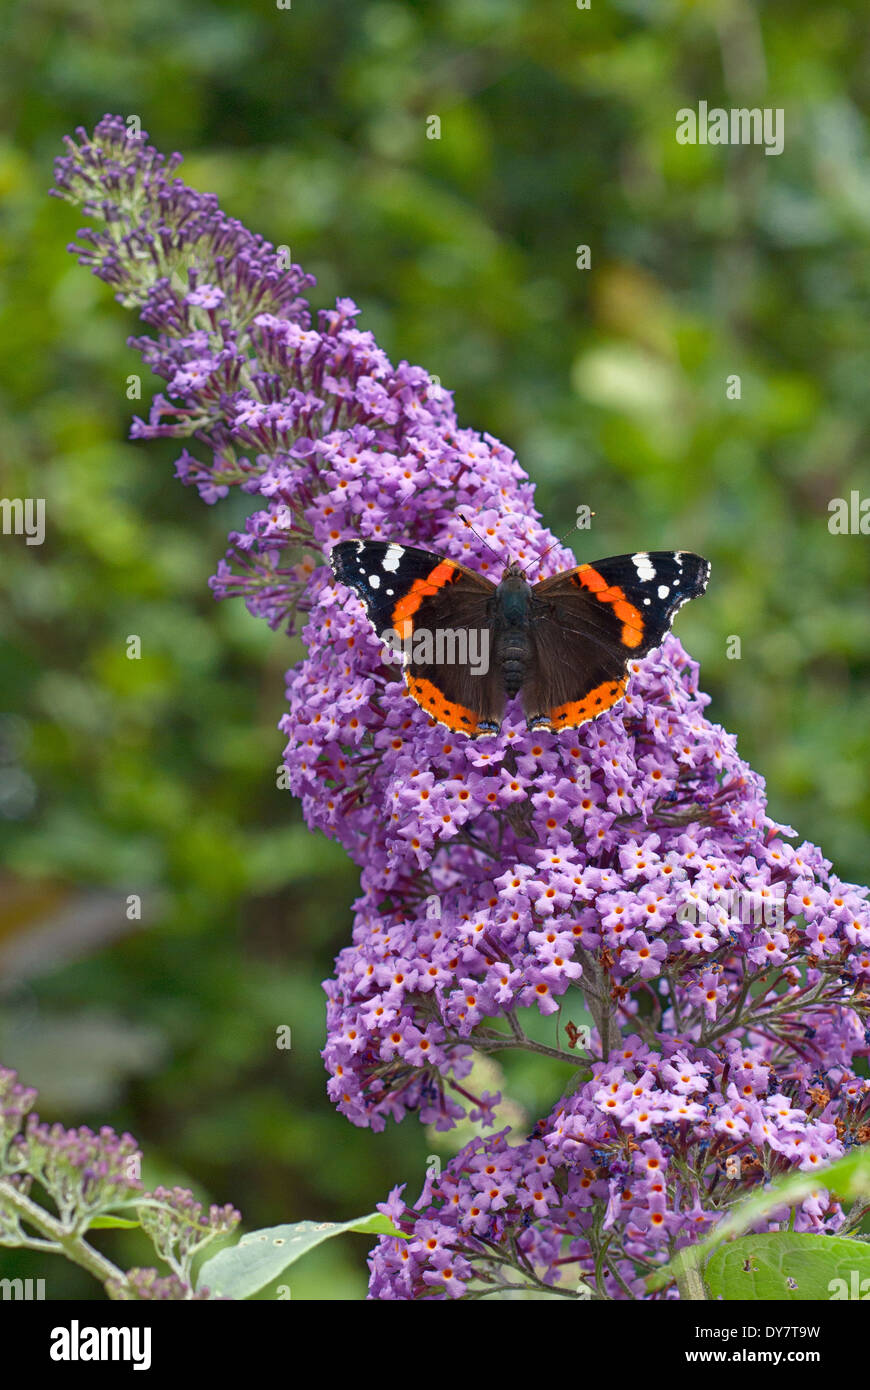 Red Admiral butterfly, Vanessa atalanta on Buddleja davidii Butterfly Heaven, Butterfly Bush. Summer. Stock Photo